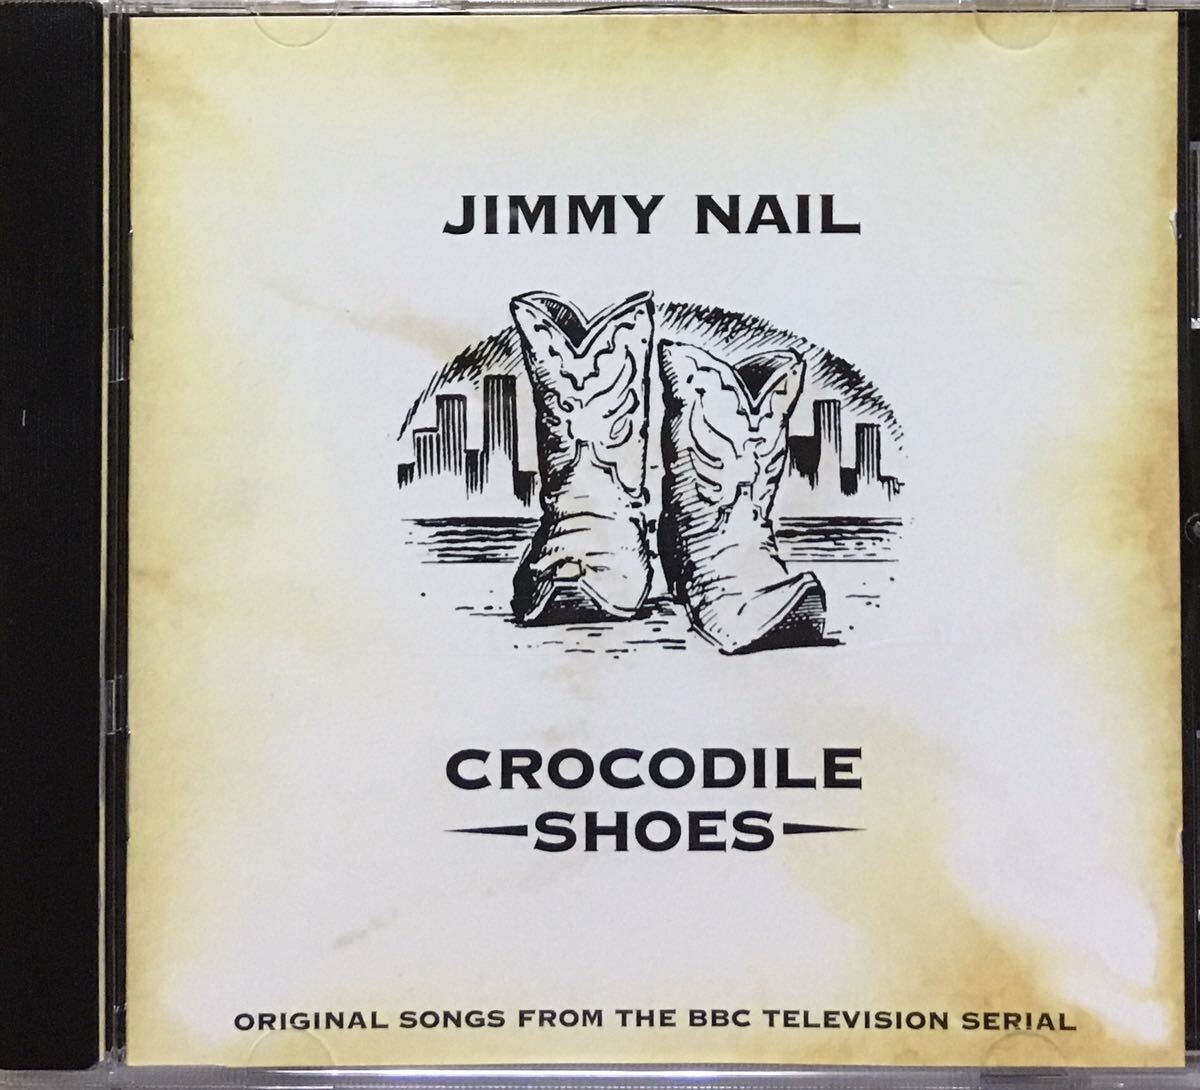 Jimmy Nail [Crocodile Shoes] ブリティッシュ / フォークロック / カントリーロック / 英国スワンプ / パブロック / B.J. Cole(Cochise)の画像1